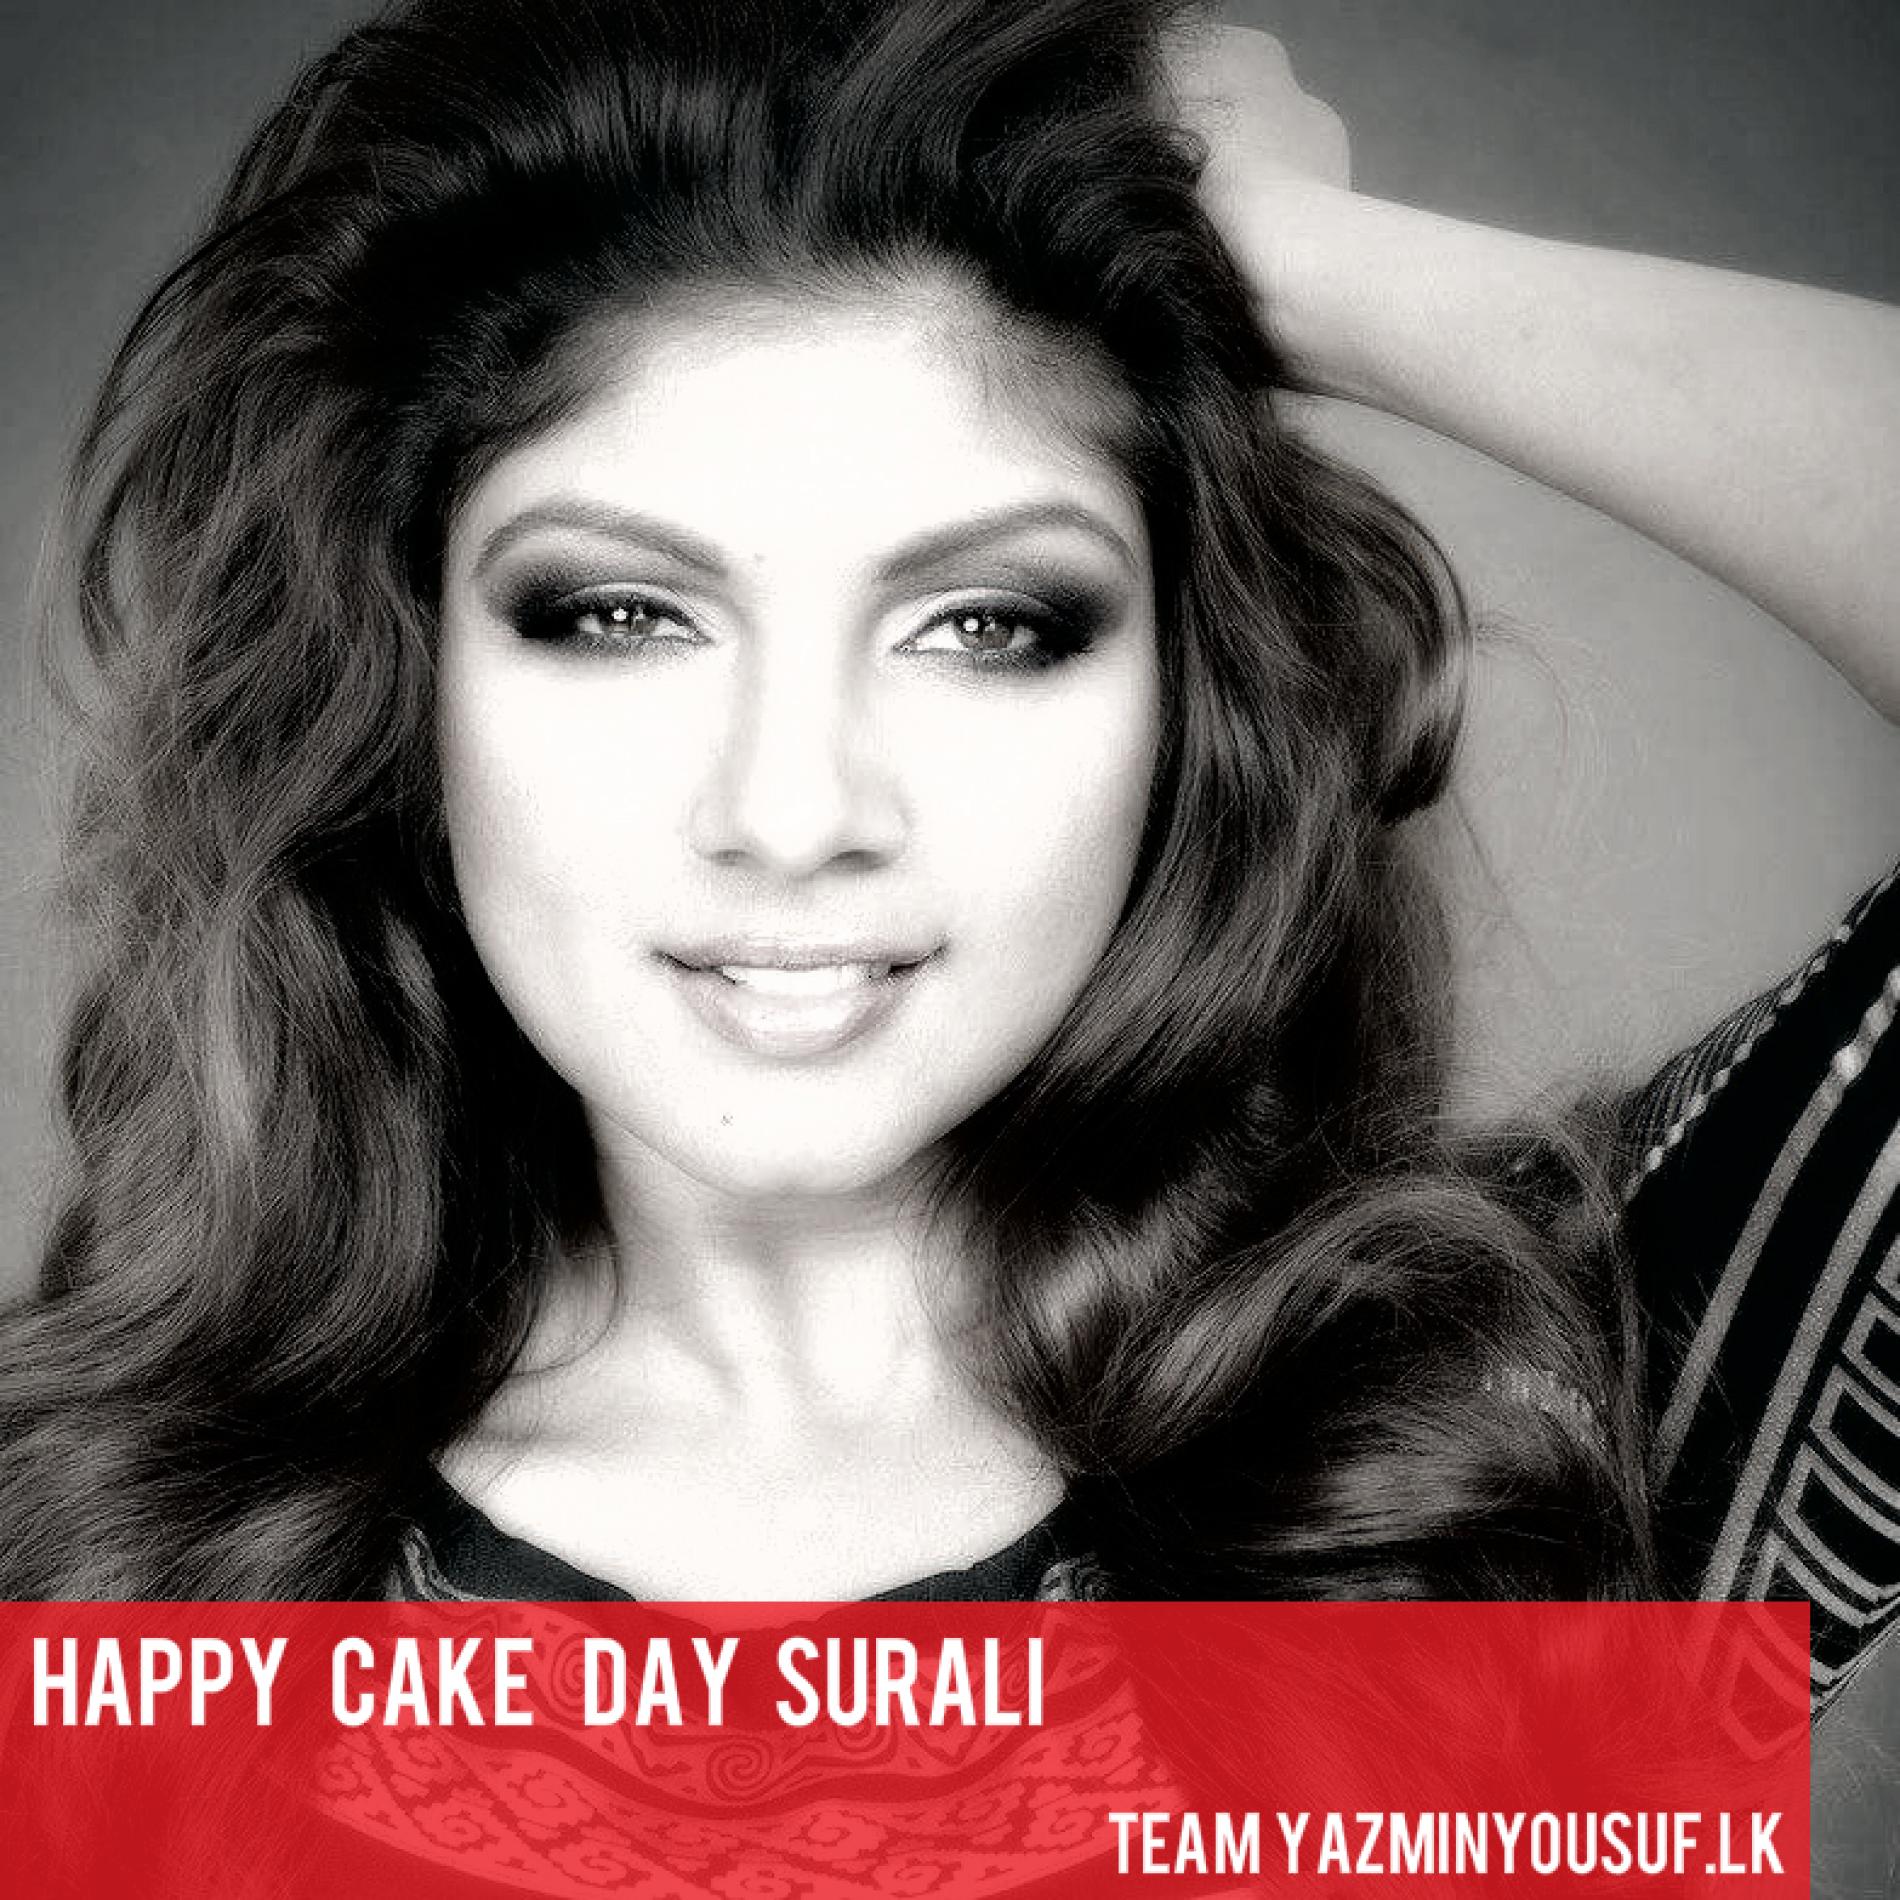 Happy Cake Day Surali